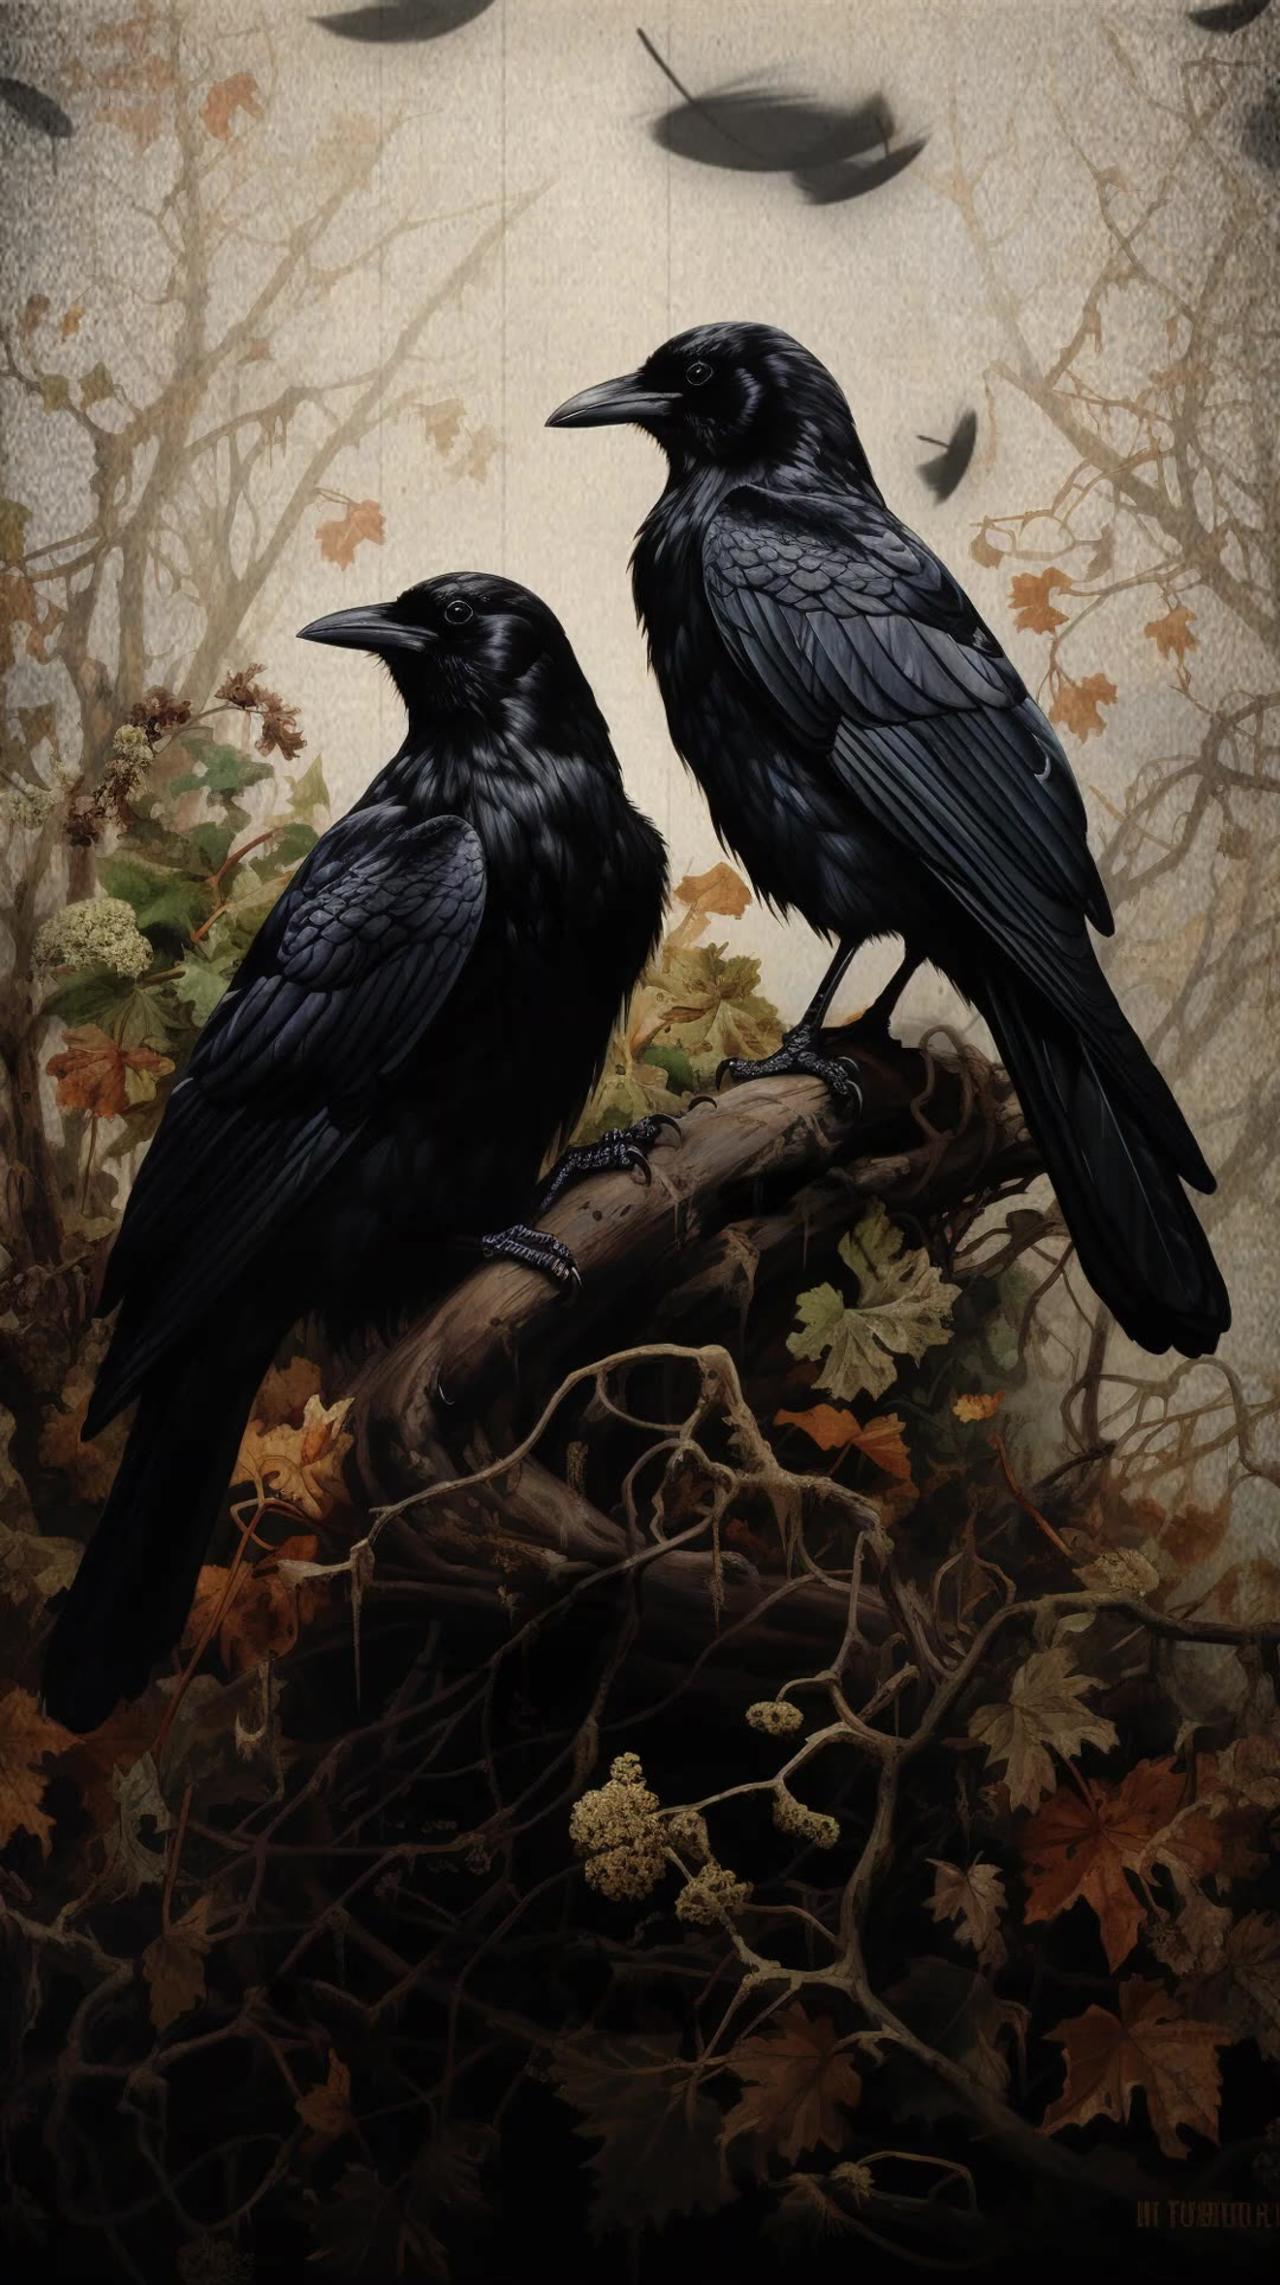 Ravens | Black Birds | Gothic Art | Digital Art #ravens #crows